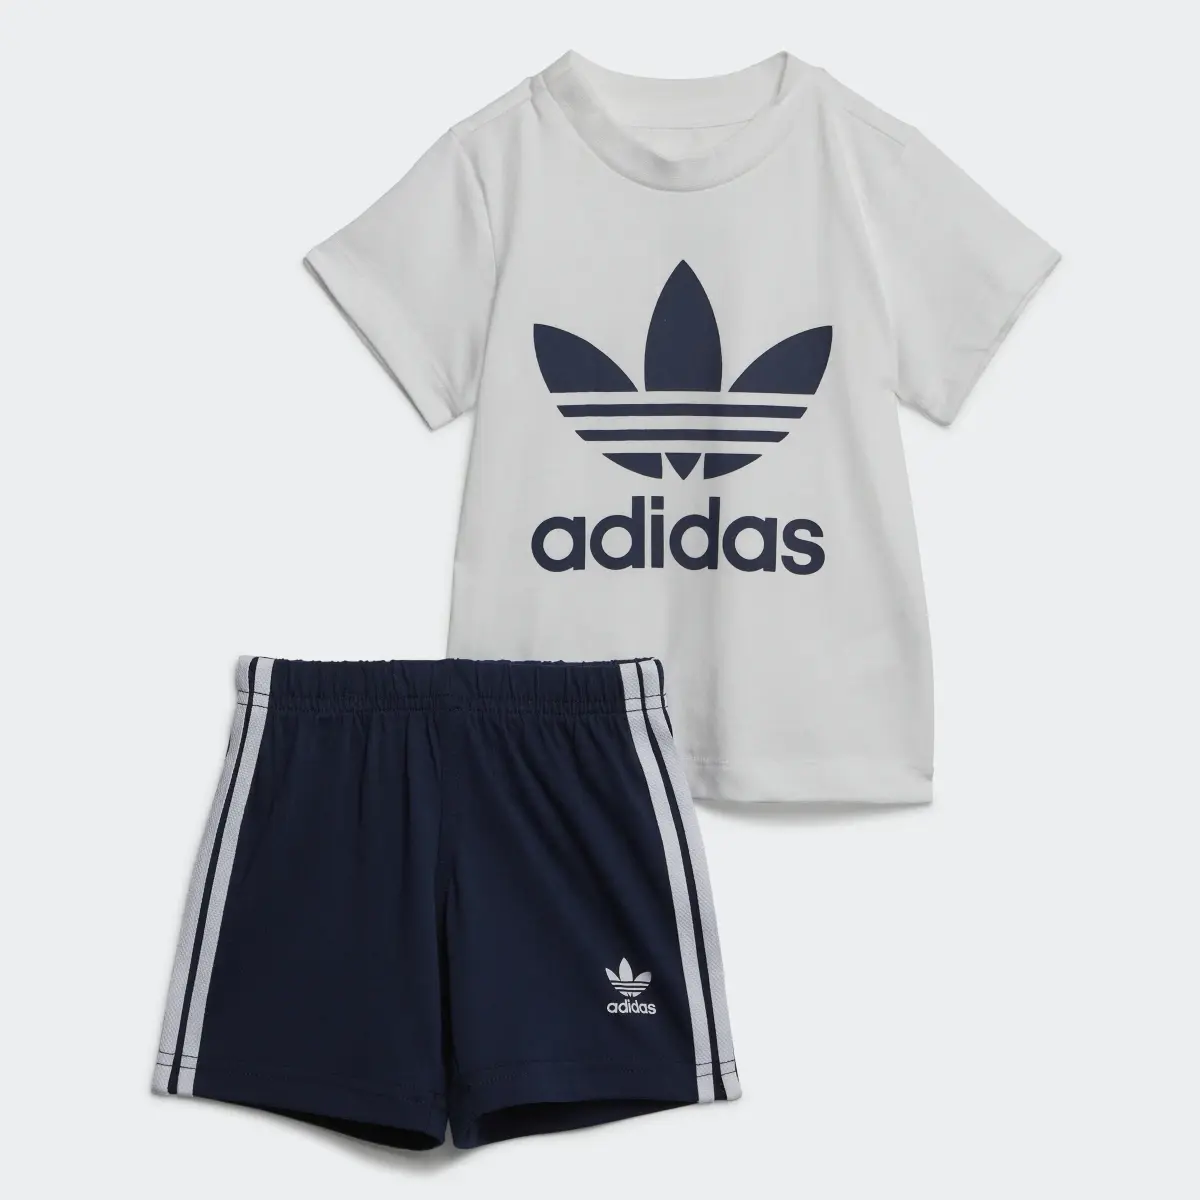 Adidas Completo Trefoil Shorts Tee. 2